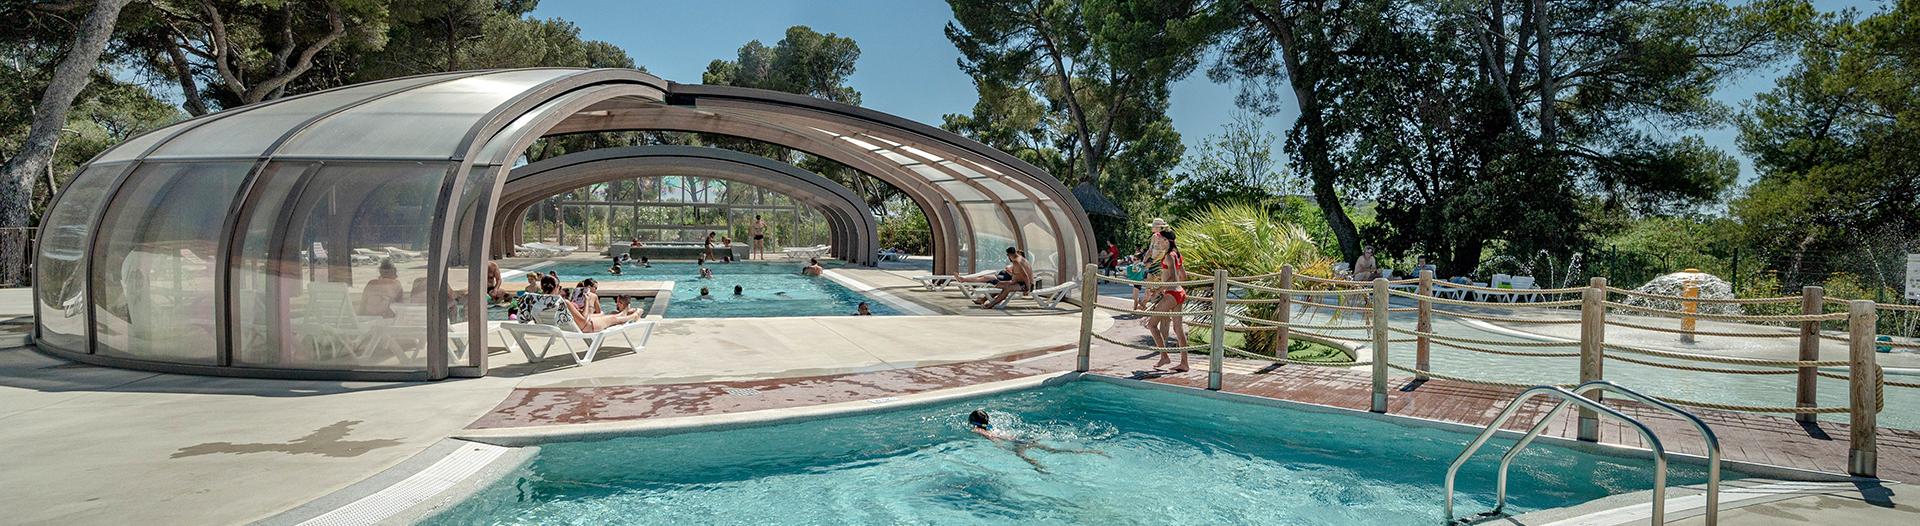 Camping-Avignon-Parc-Parc-Aquatique